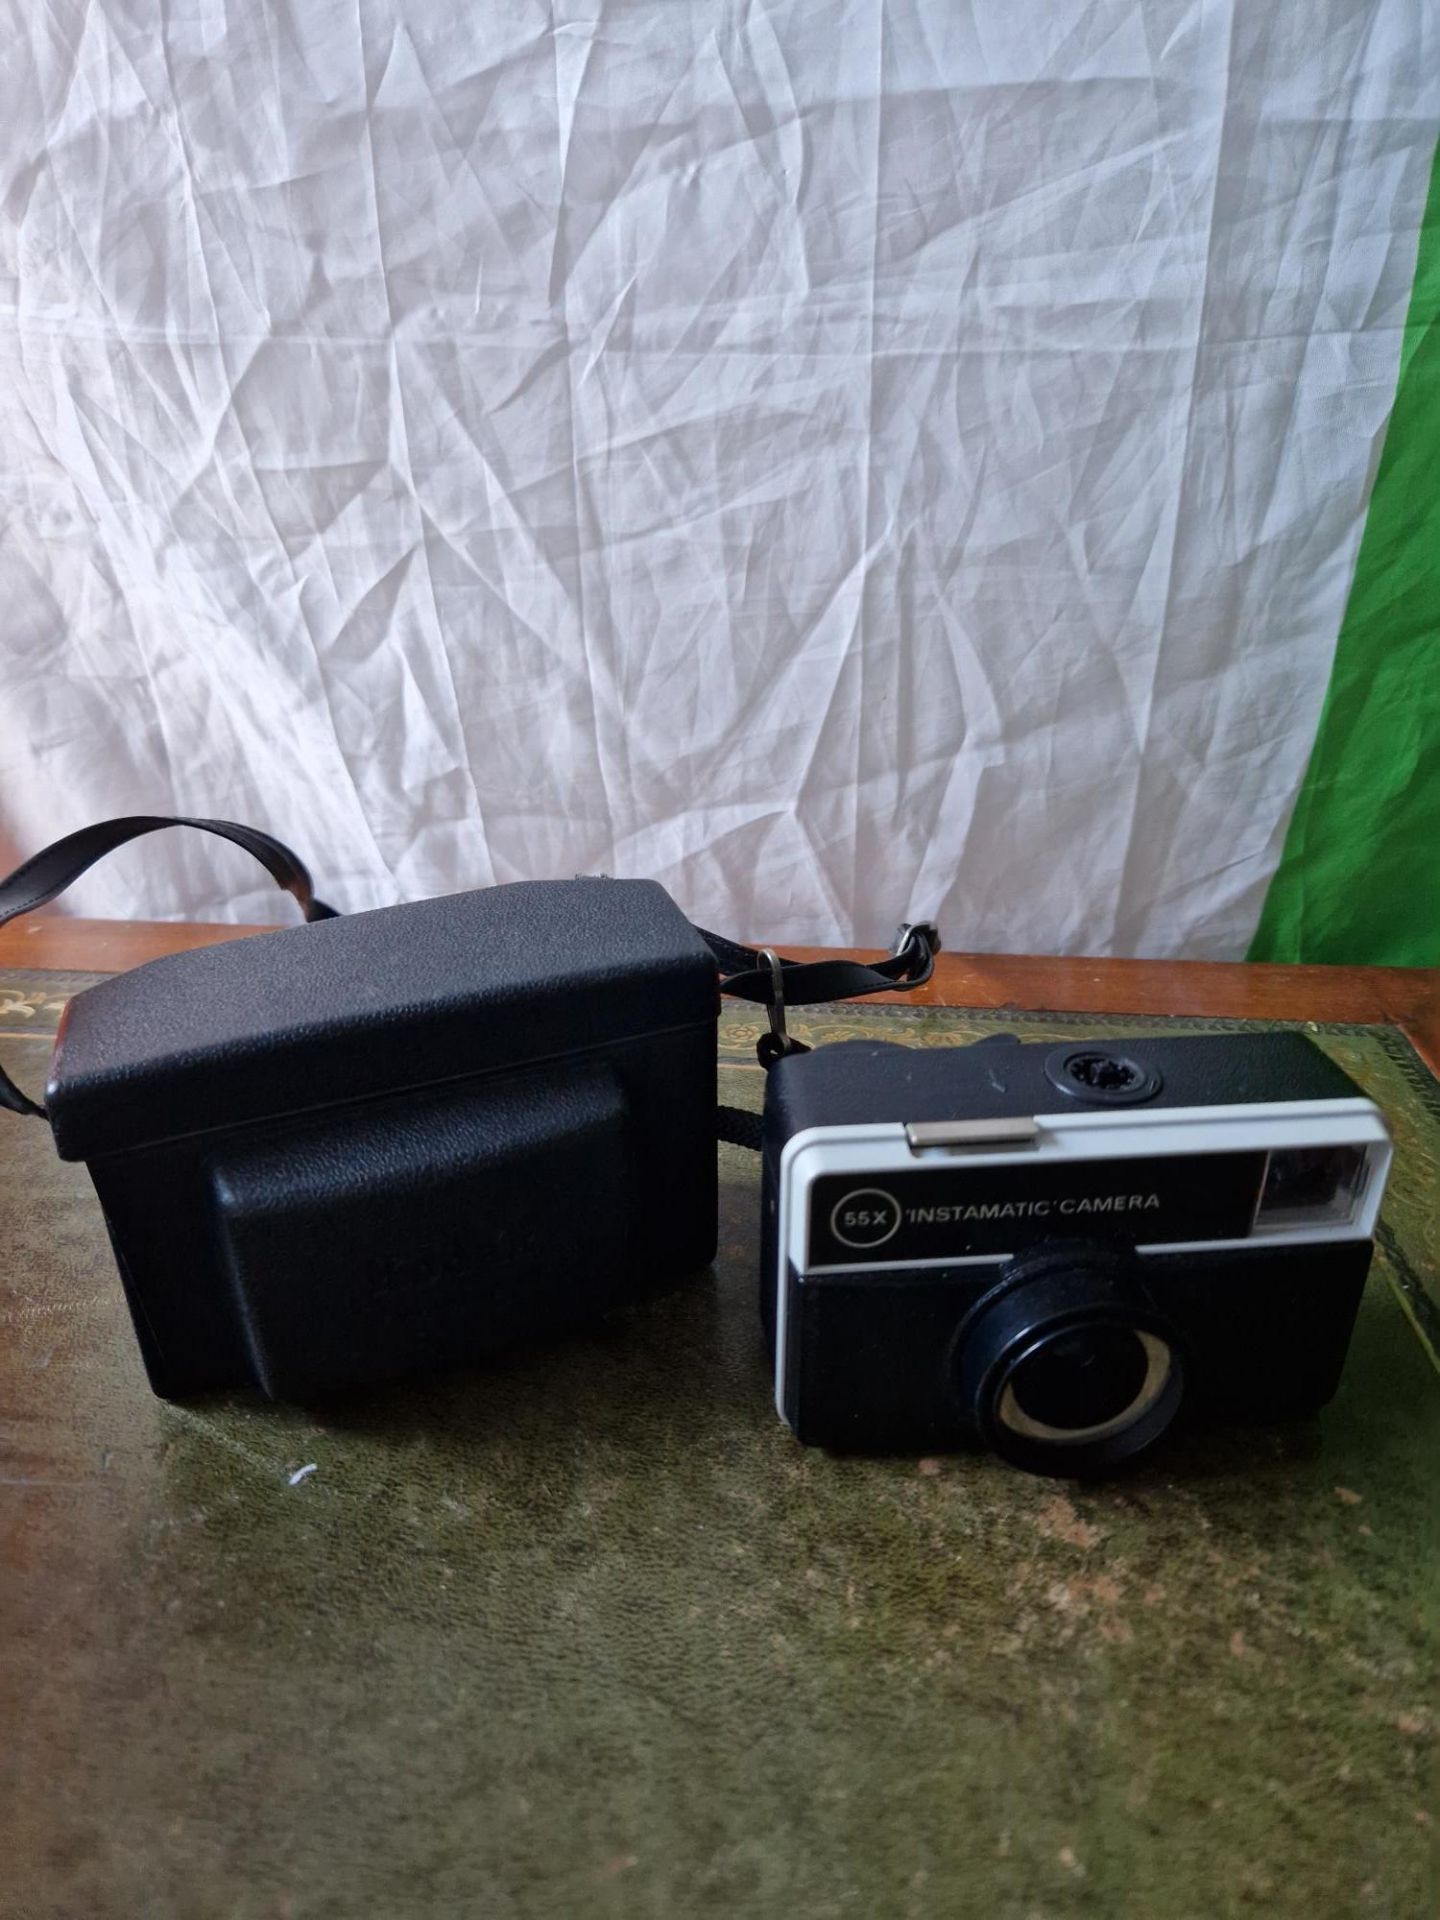 Instamatic camera